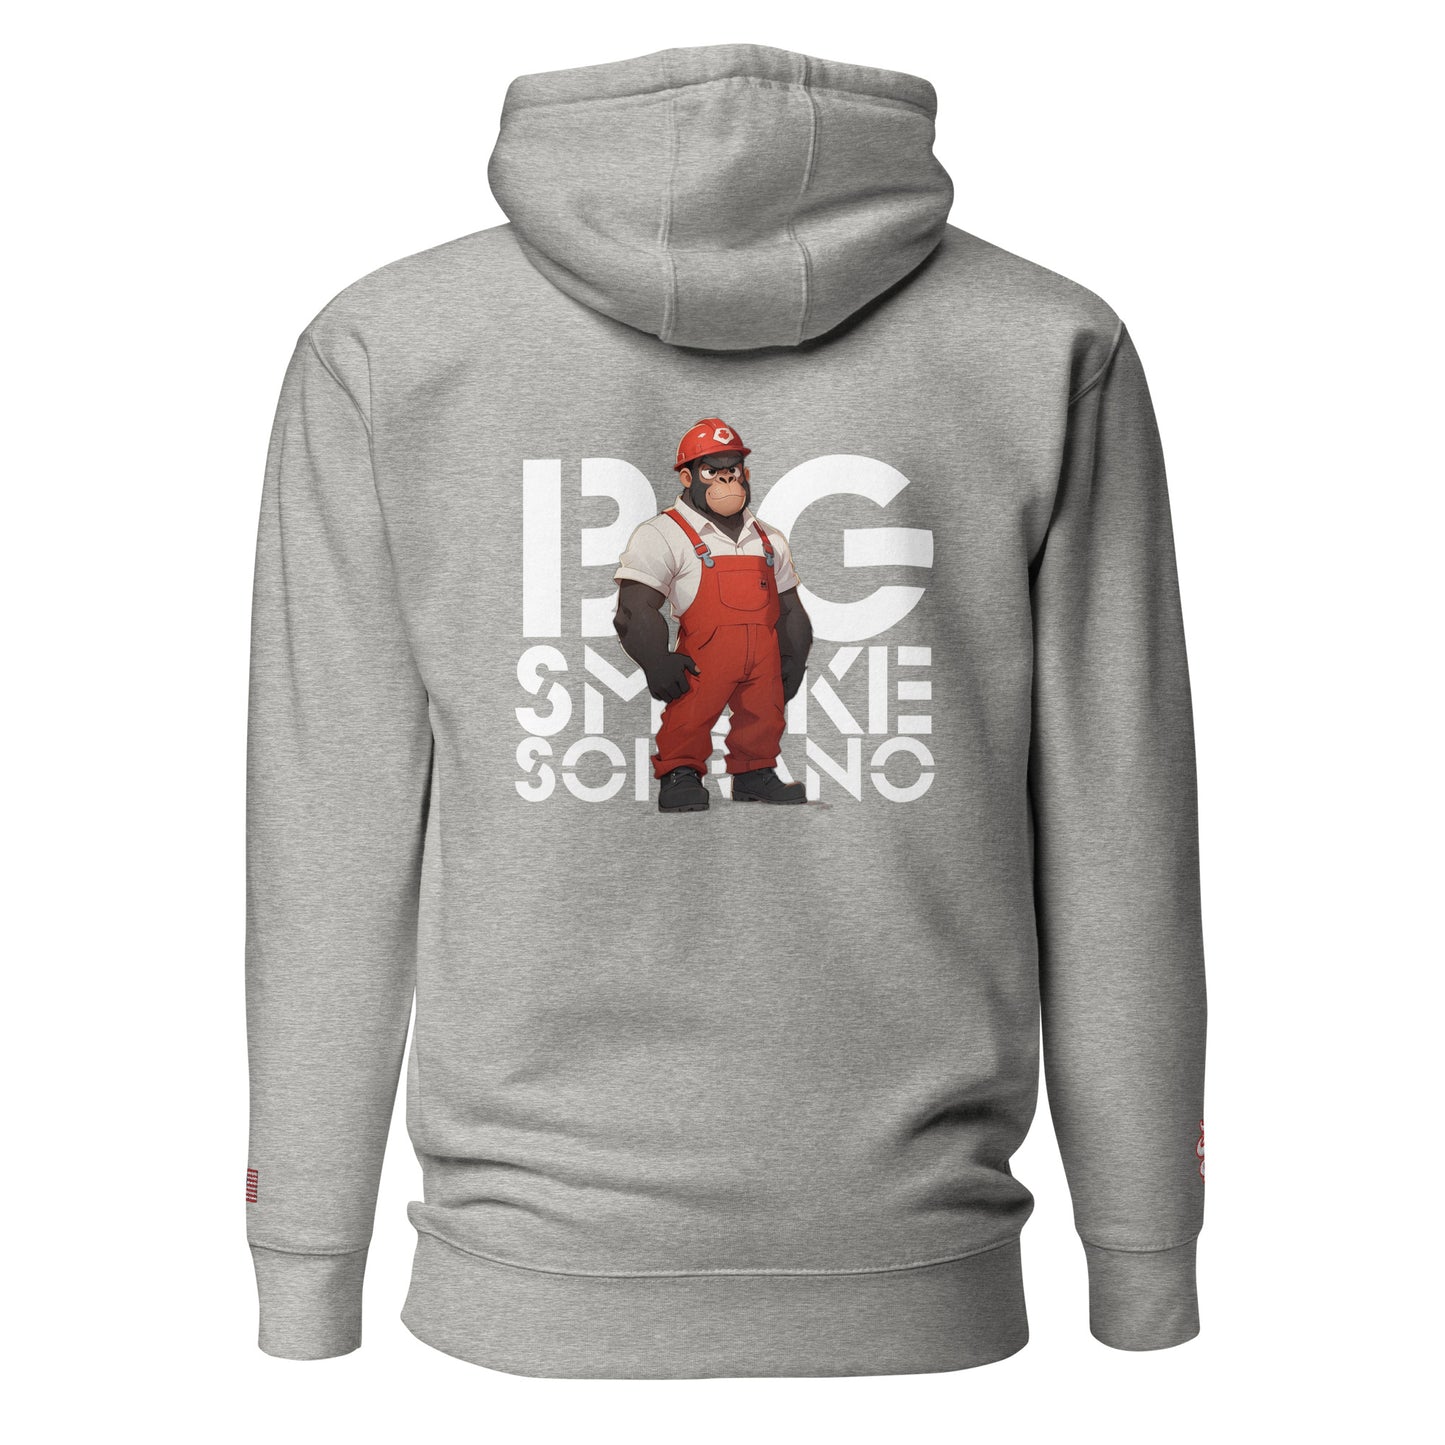 BigSmoke Soprano Clothing: BigSmoke Soprano Worldwide Collection: Big Motion Unisex Hoodie (USA Edition)